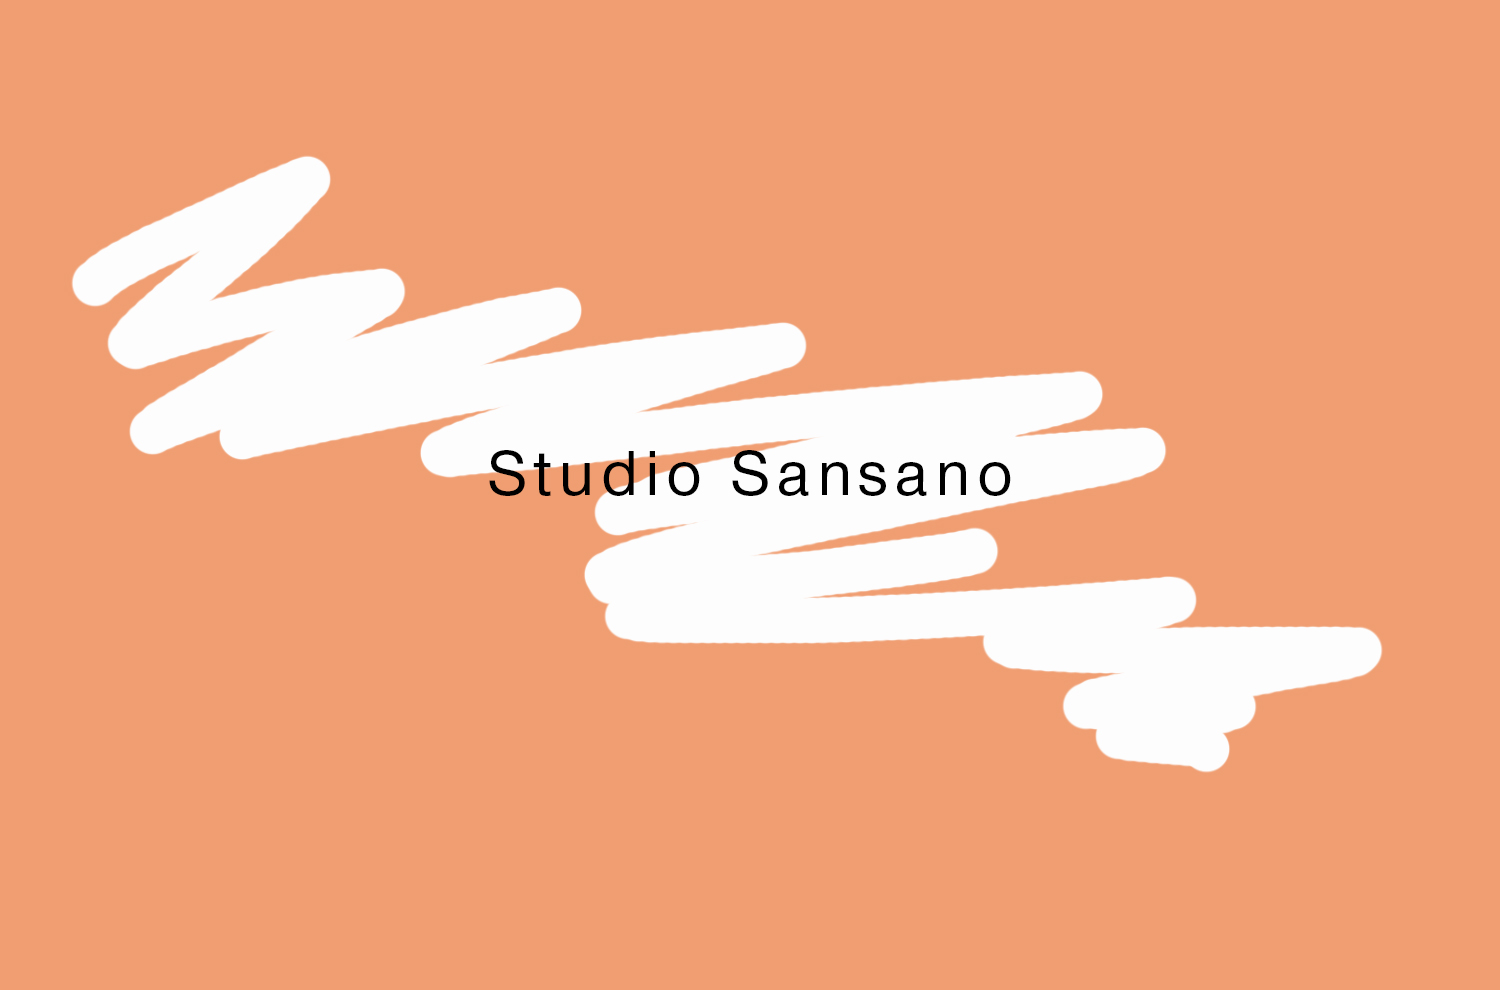 Studio Sansano